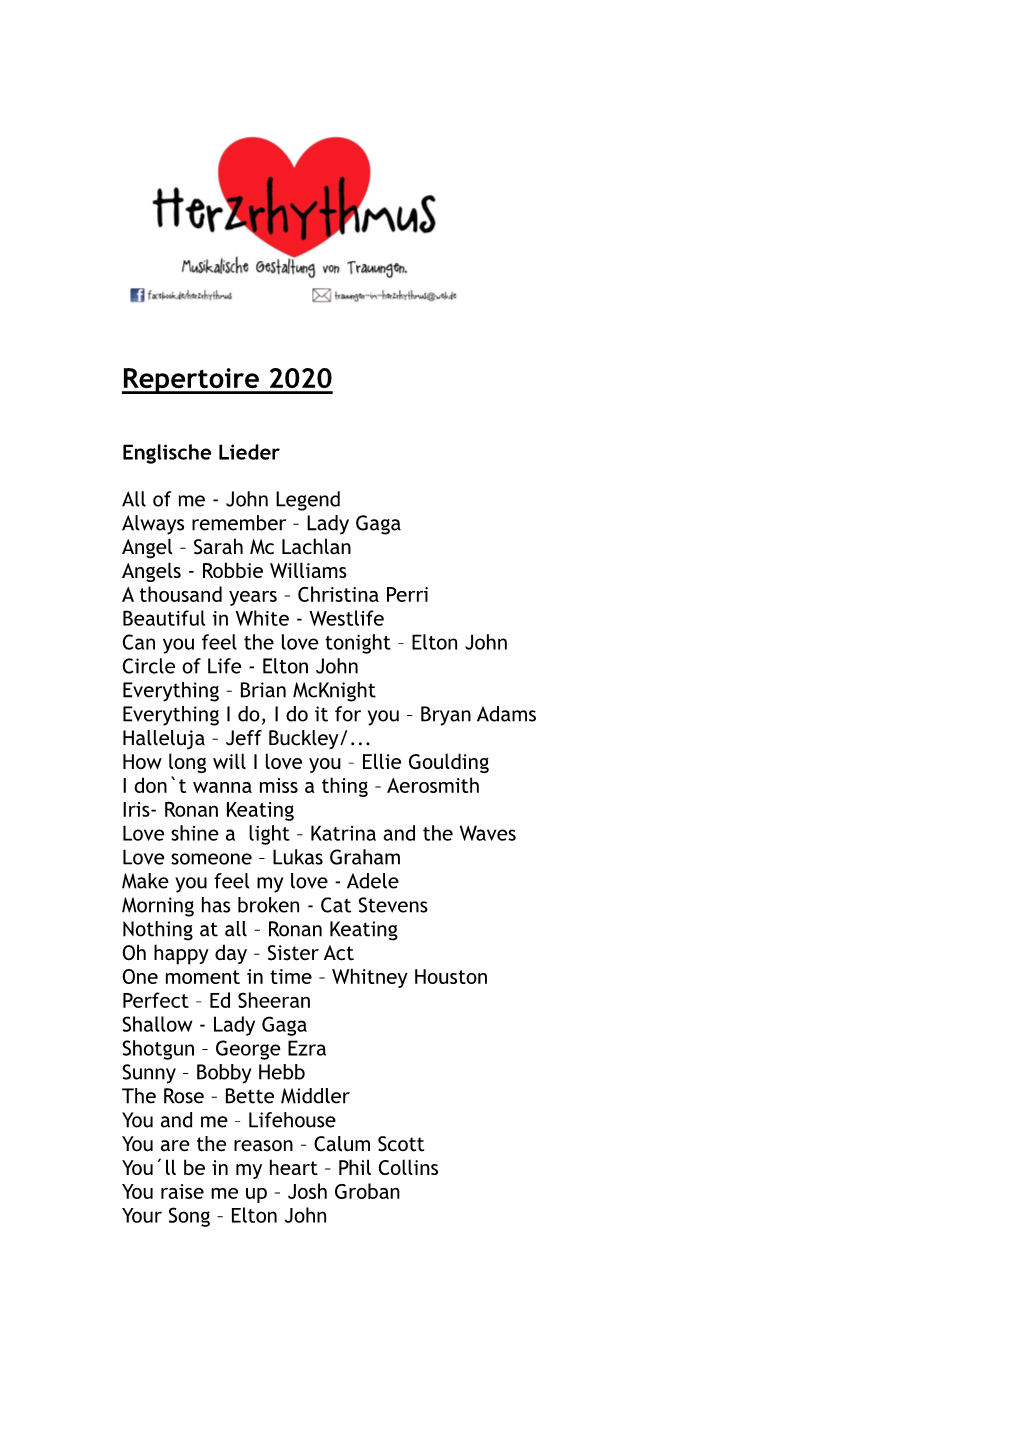 Herzrhythmus Repertoireliste 2020